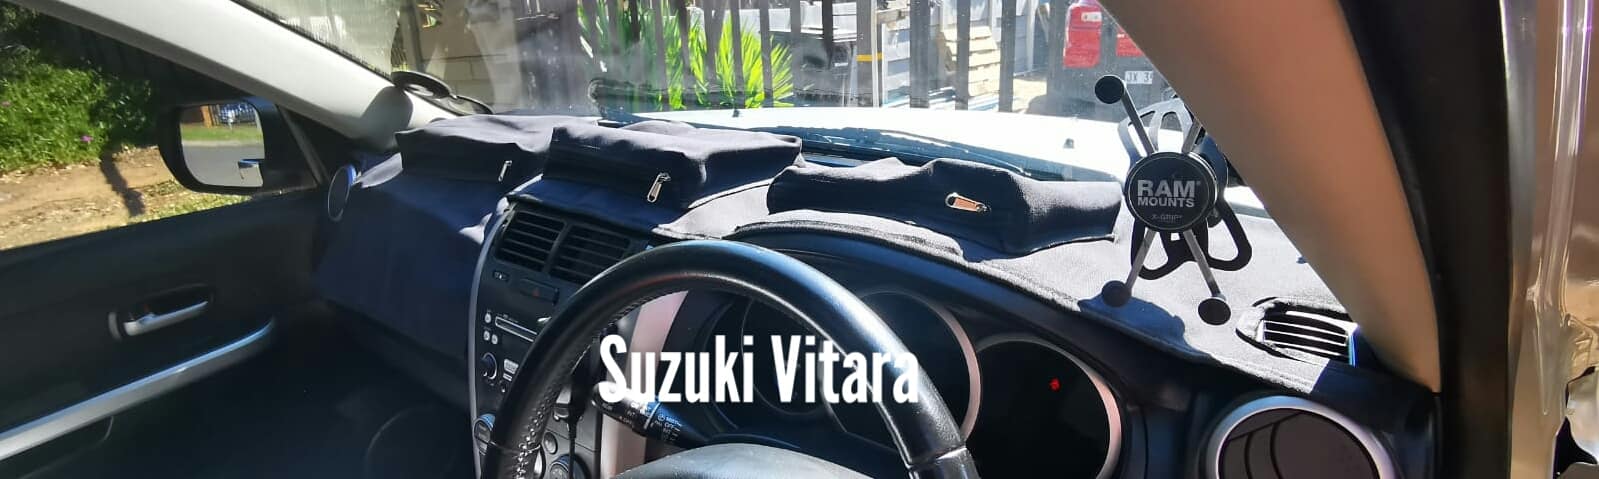 Suzuki Vitara Dash cover